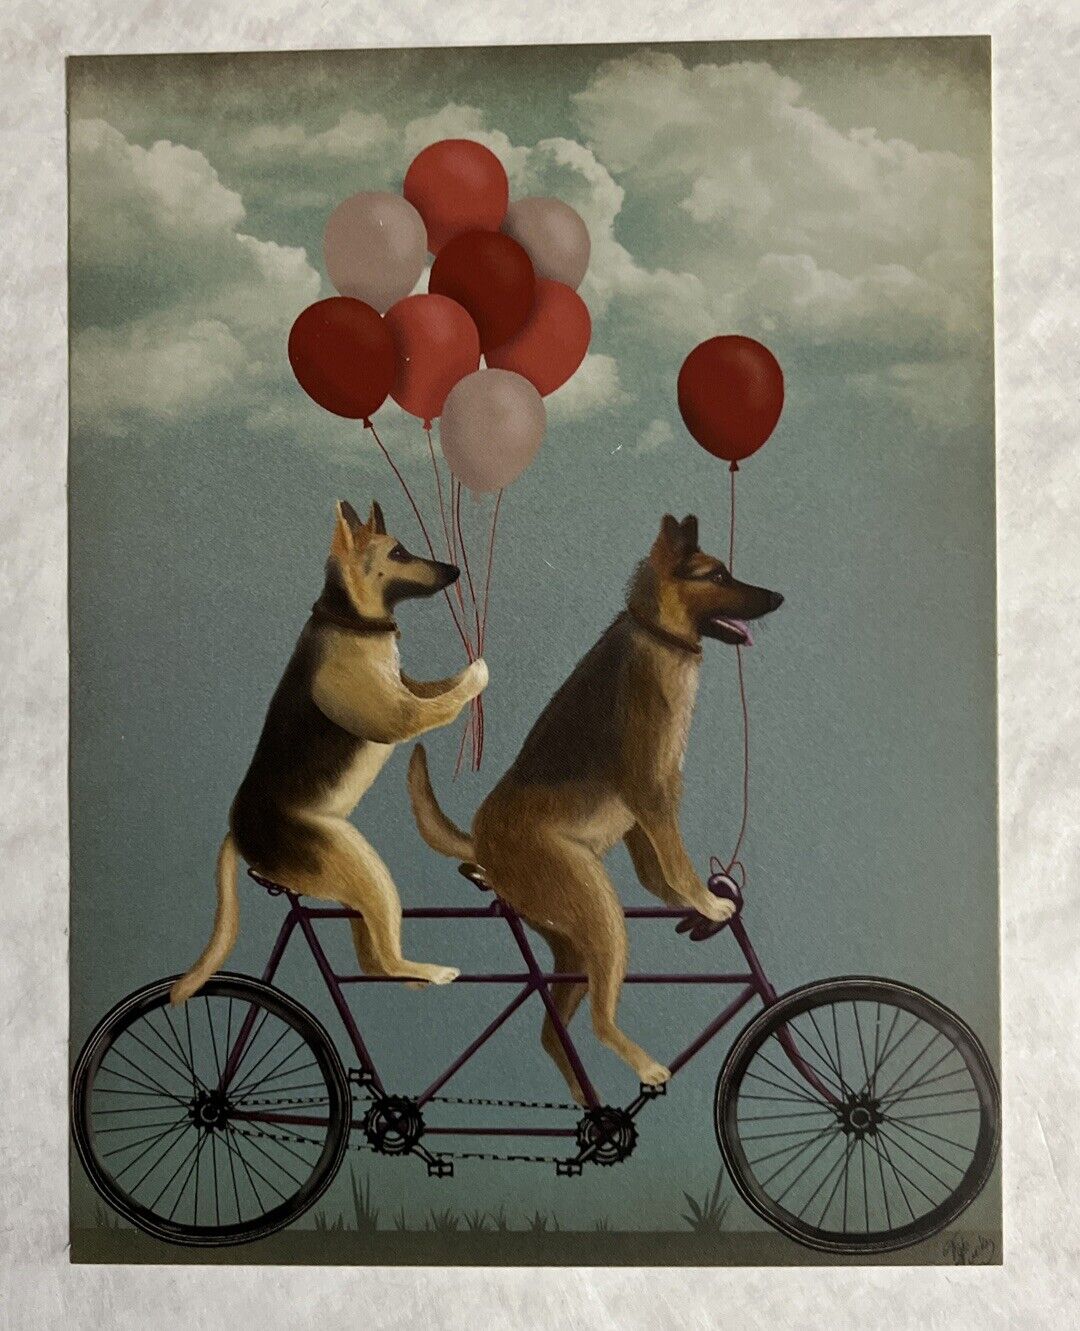 GERMAN SHEPHERD DOGS RIDING BICYCLE BALLOONS ART POSTCARD PRINT 4 1/4\